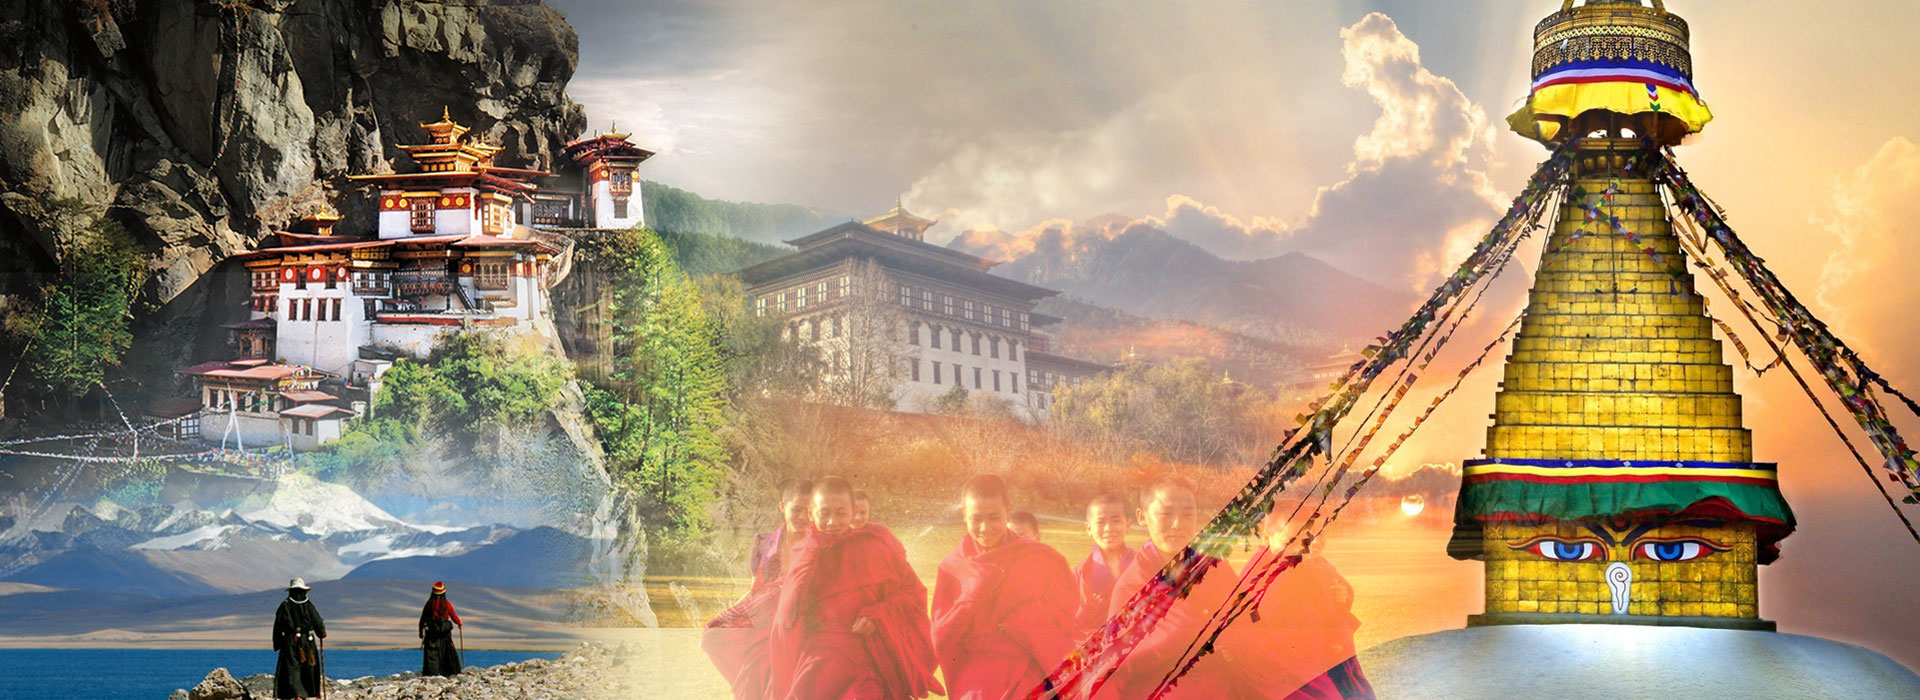 Tibet Nepal Bhutan Tour